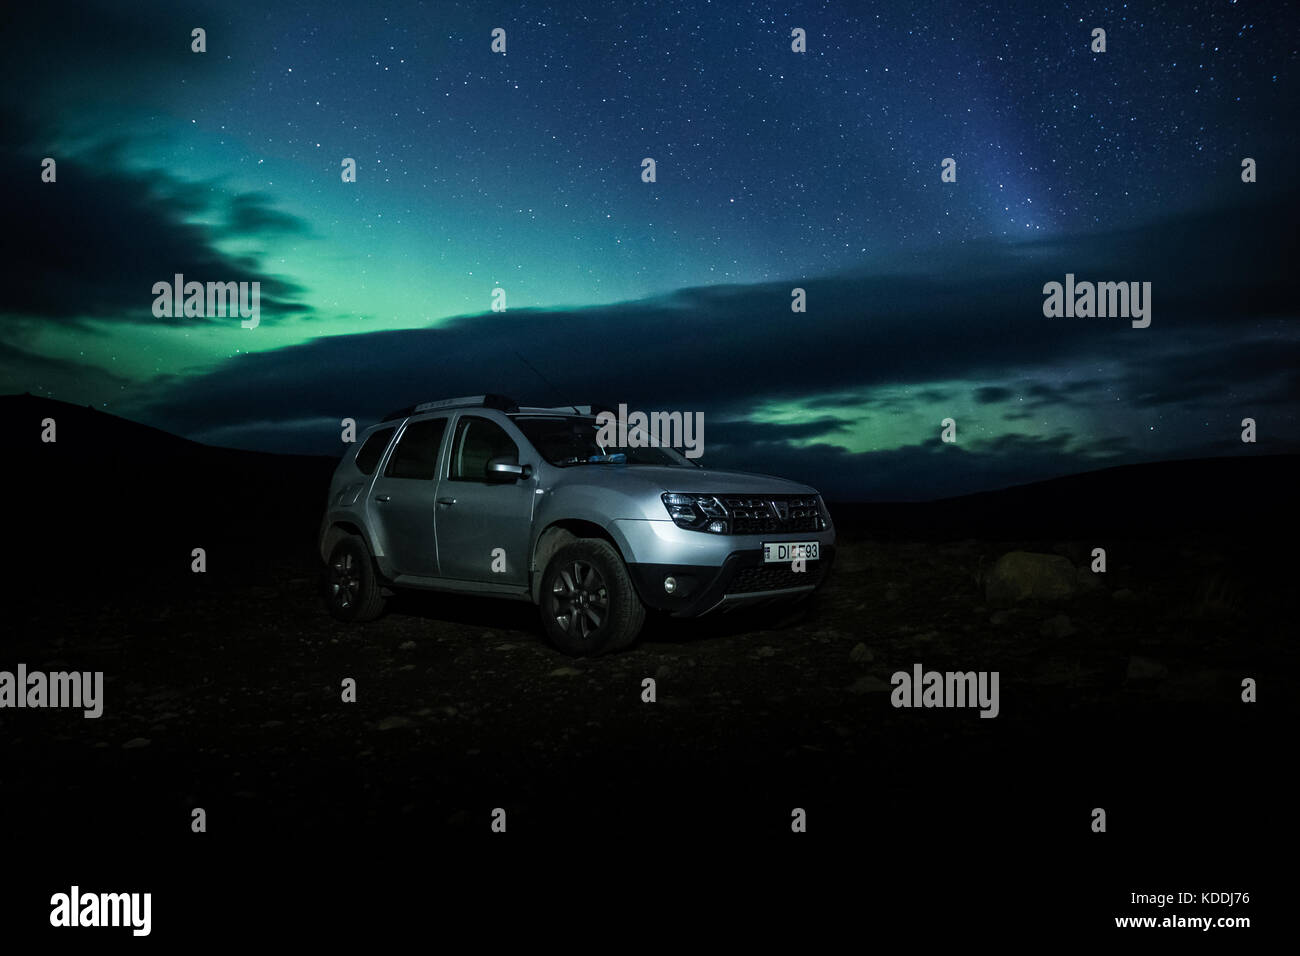 Hire Rental Car 4x4 at Aldeyjarfoss with Northern Lights (Aurora Borealis) behind Stock Photo - Alamy